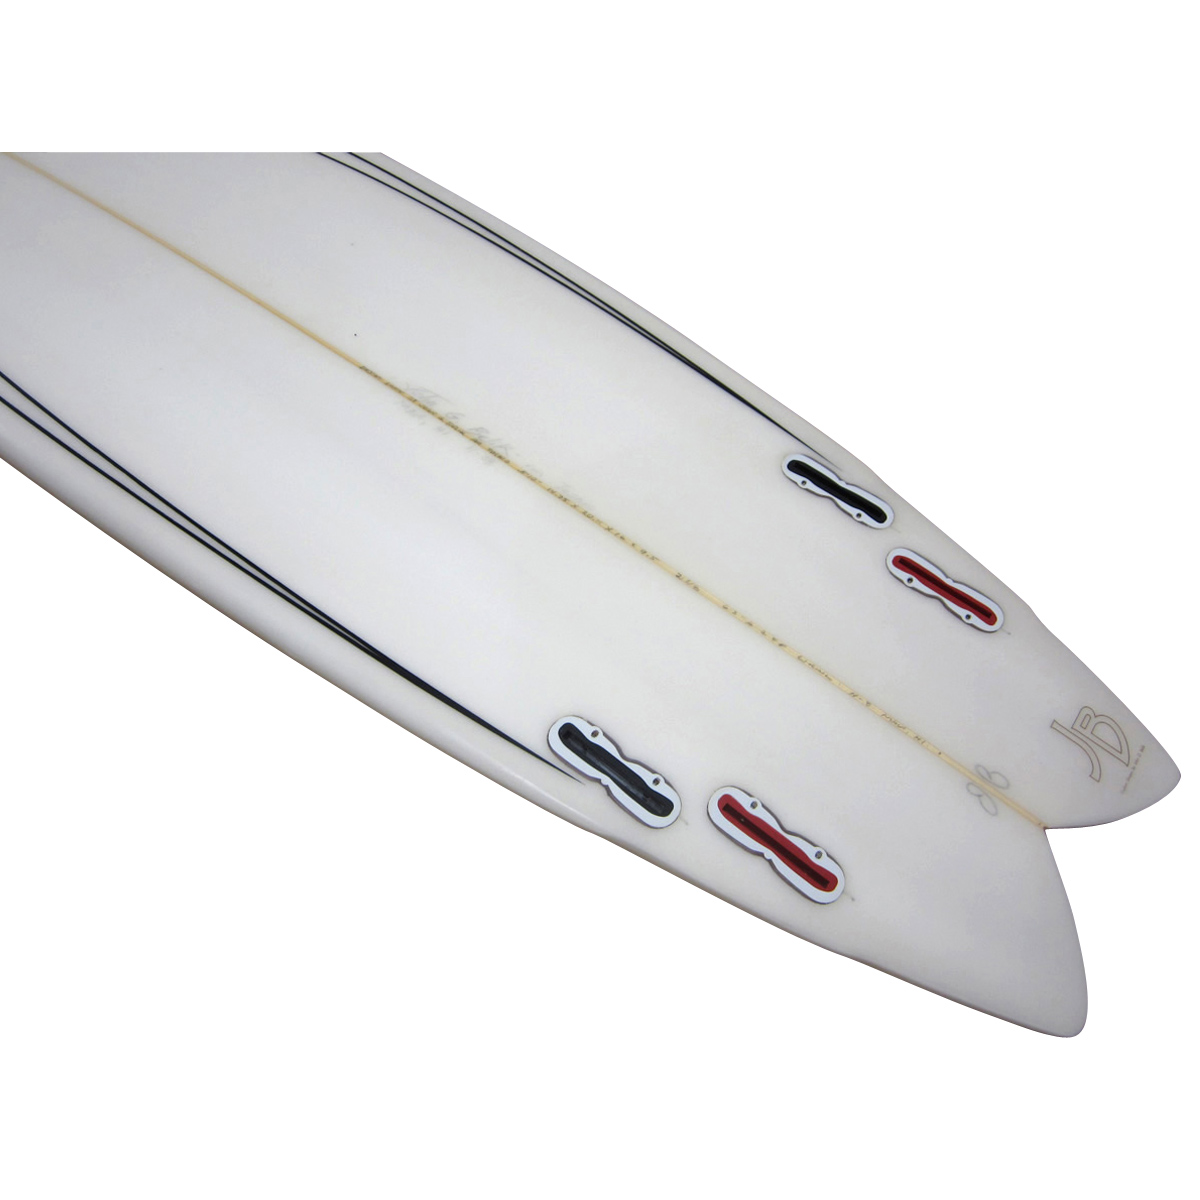 SK SURFBOARDS / Pivot Fish 5'10 Shaped By John G. Belik